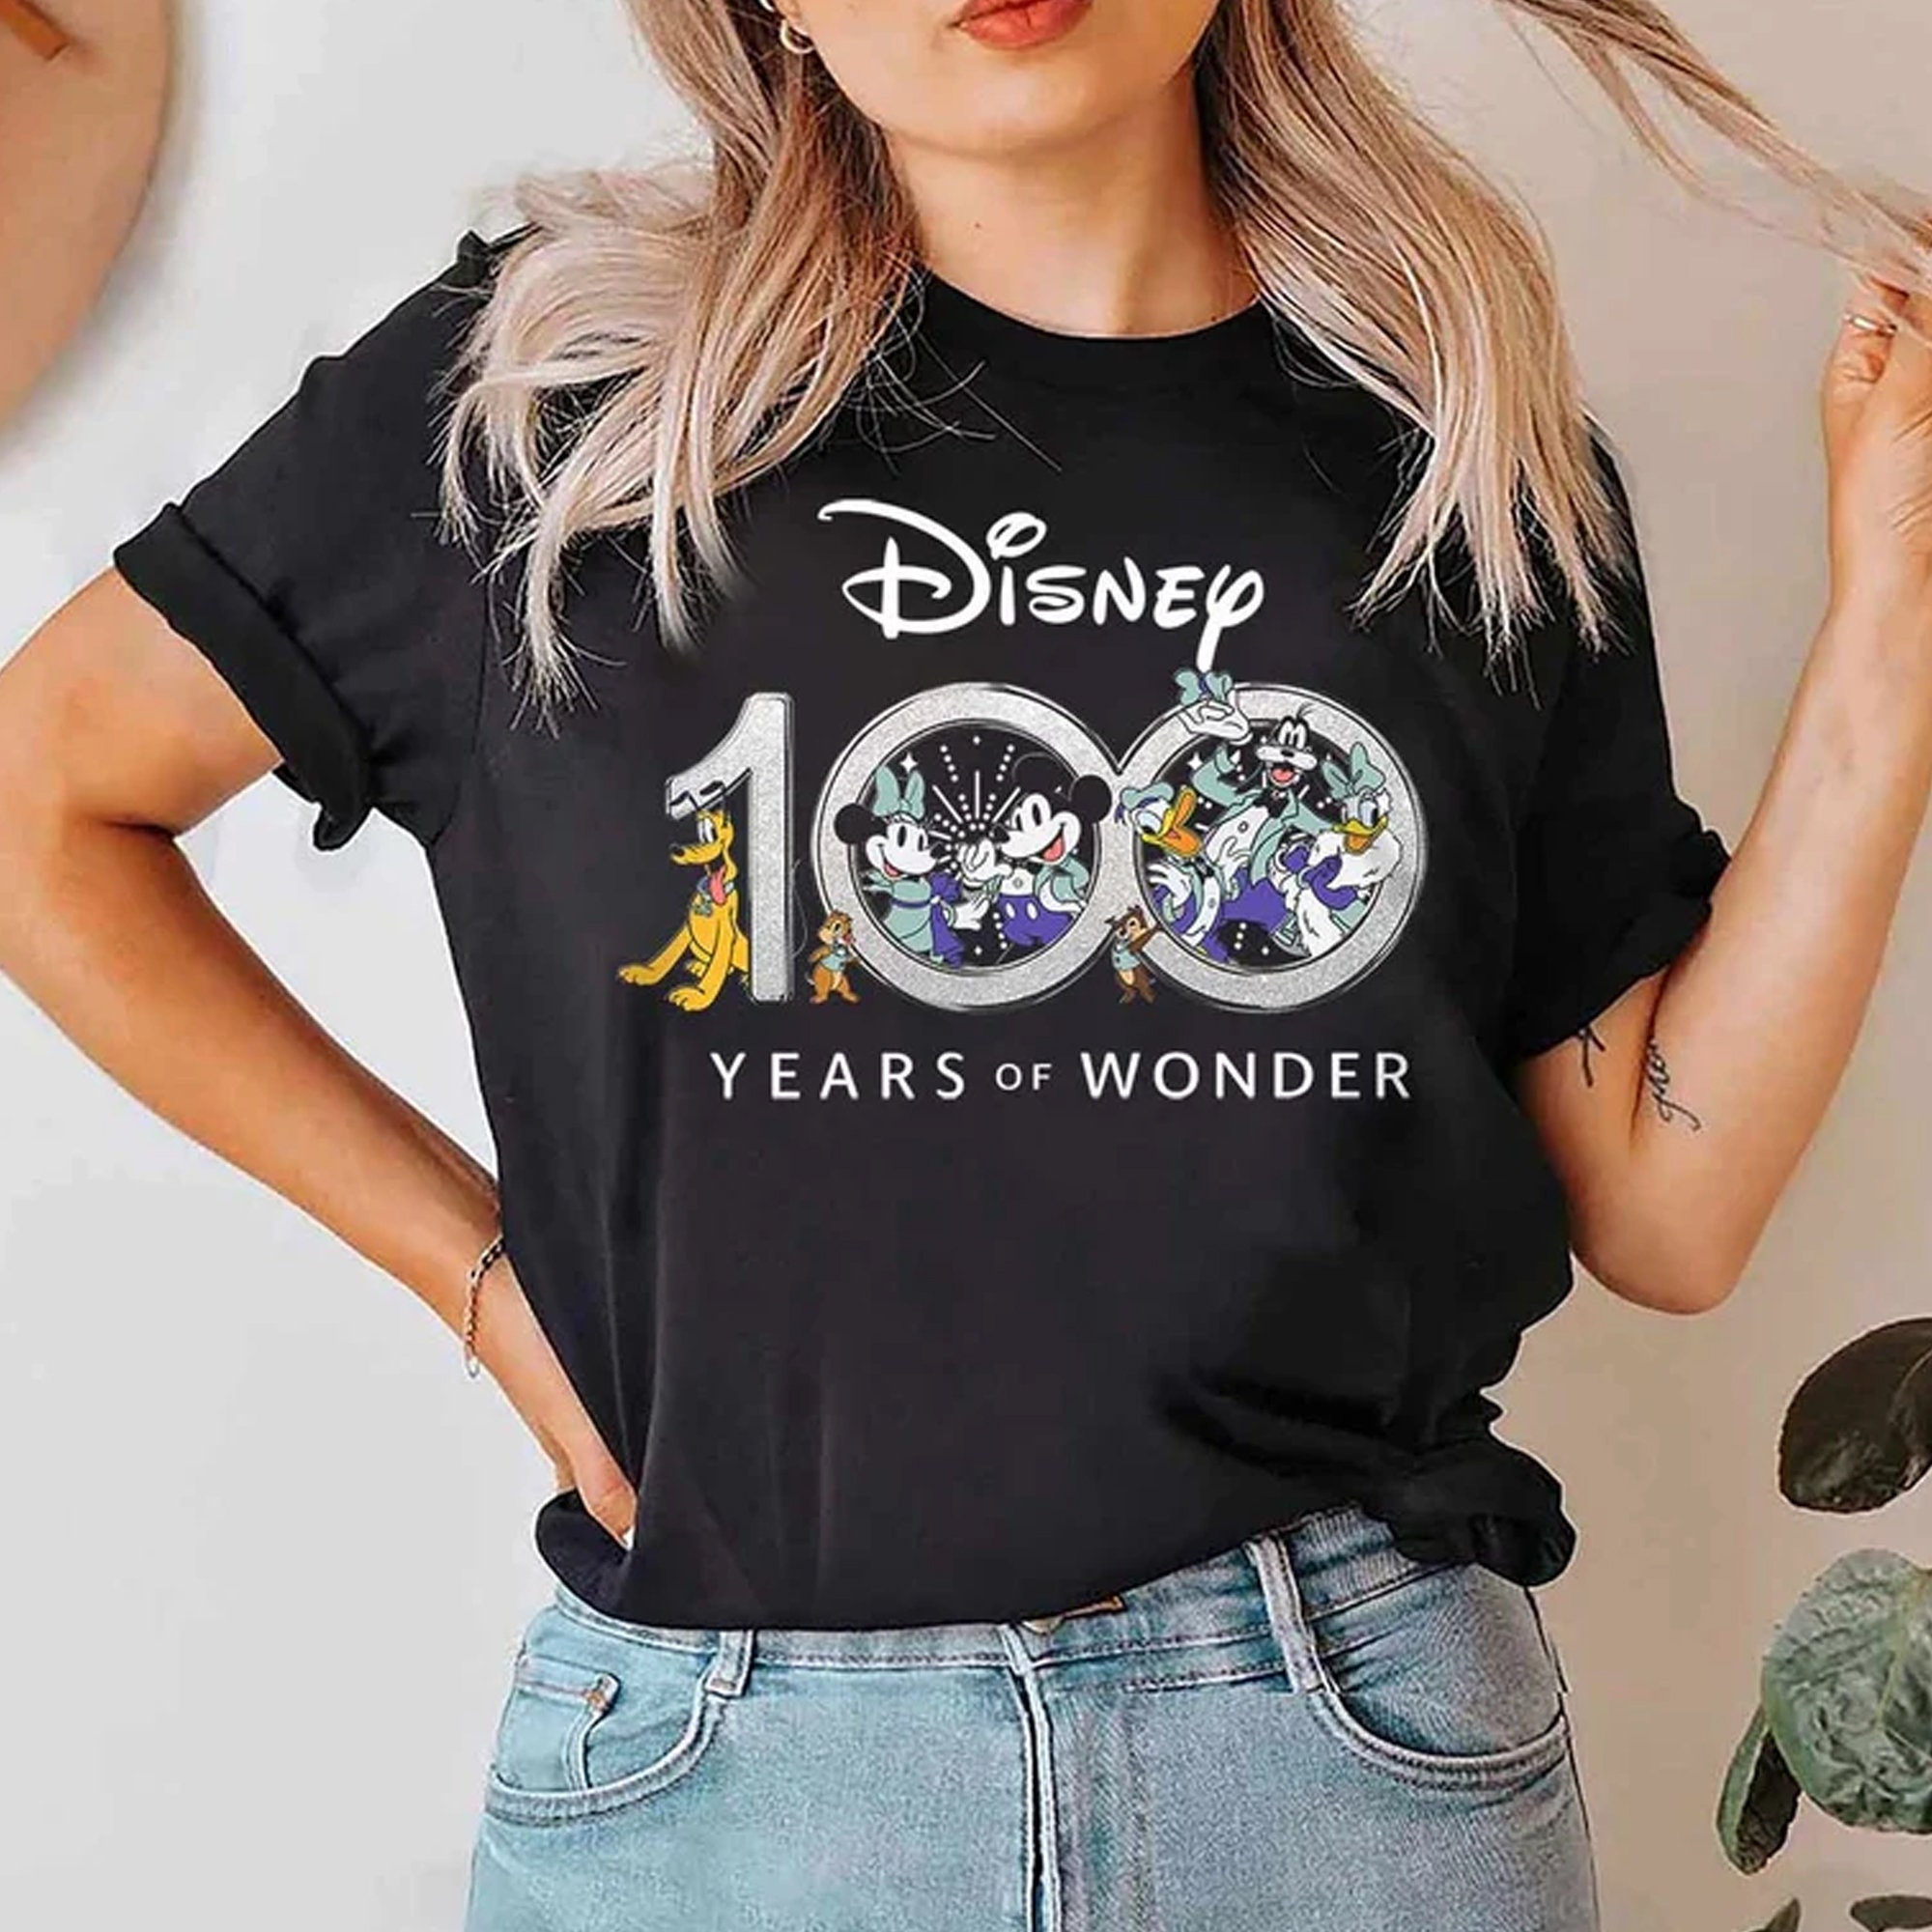 Discover ディズニー社100周年 メンズ レディース Tシャツ ディズニー ディズニーランド 100周年Anniversary Magic Kingdom Celebration ミッキー ミンネ 可愛い ギフト キッズ